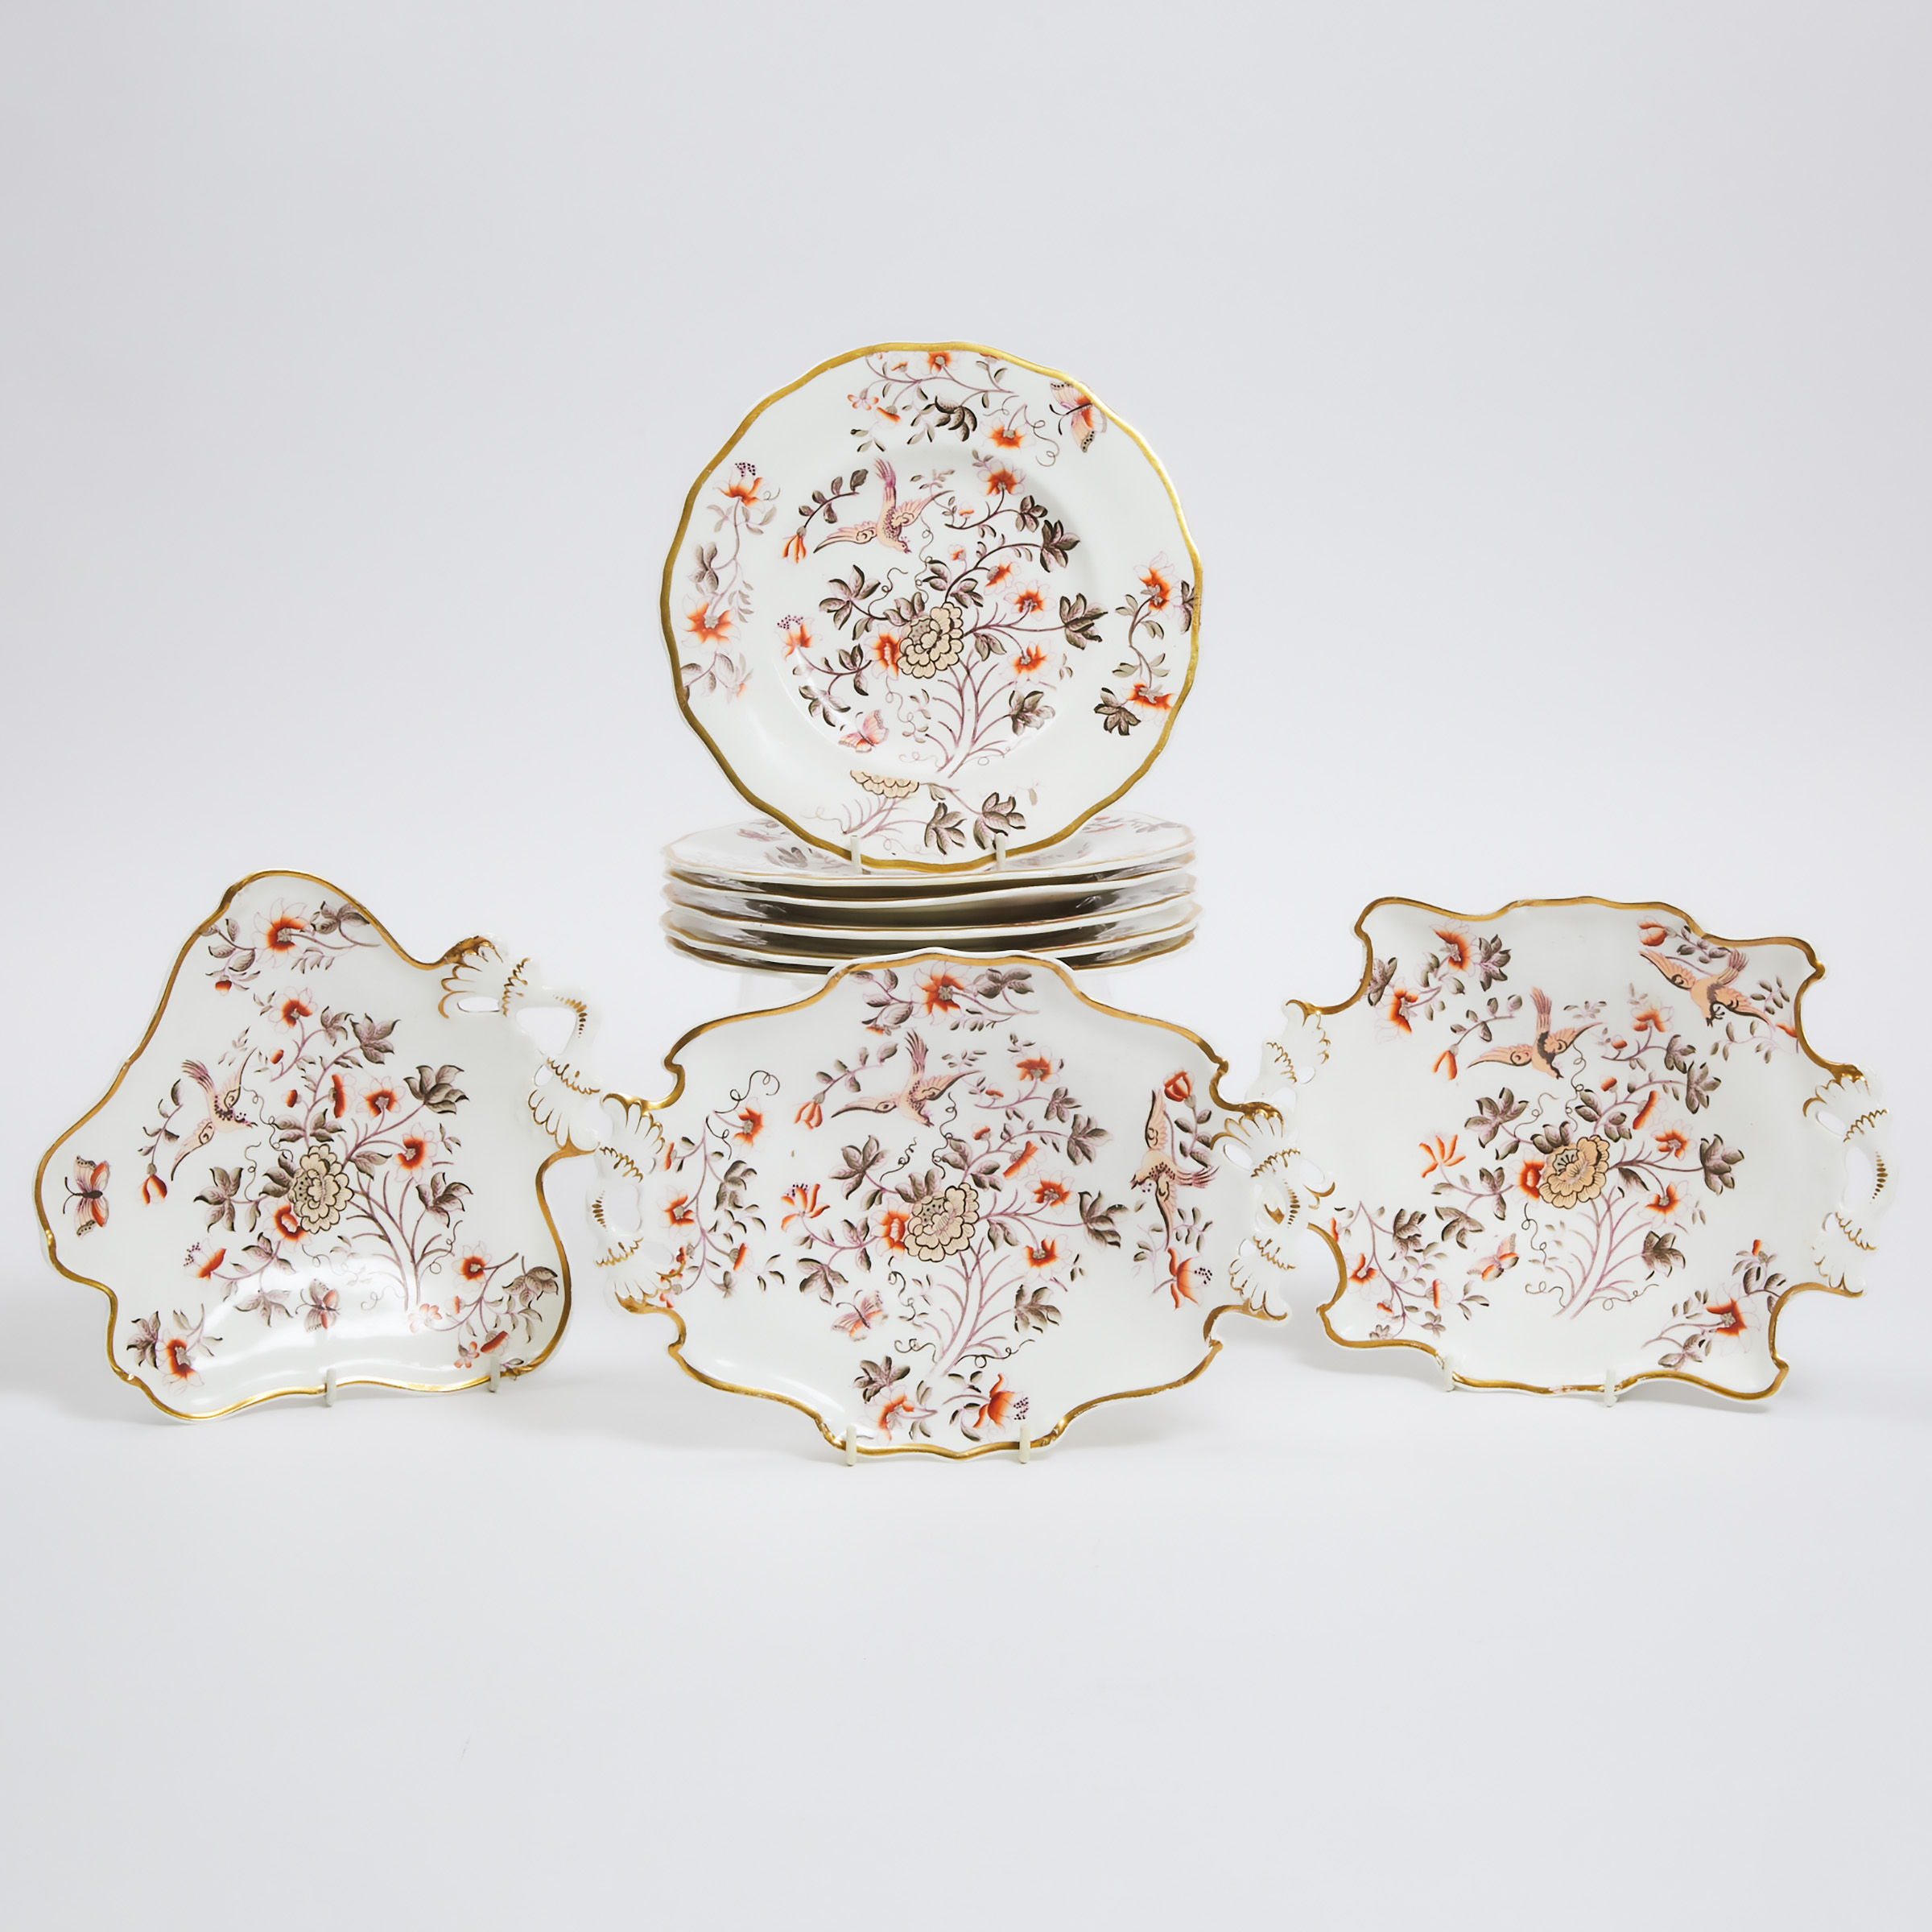 English Porcelain Dessert Service, mid-19th century